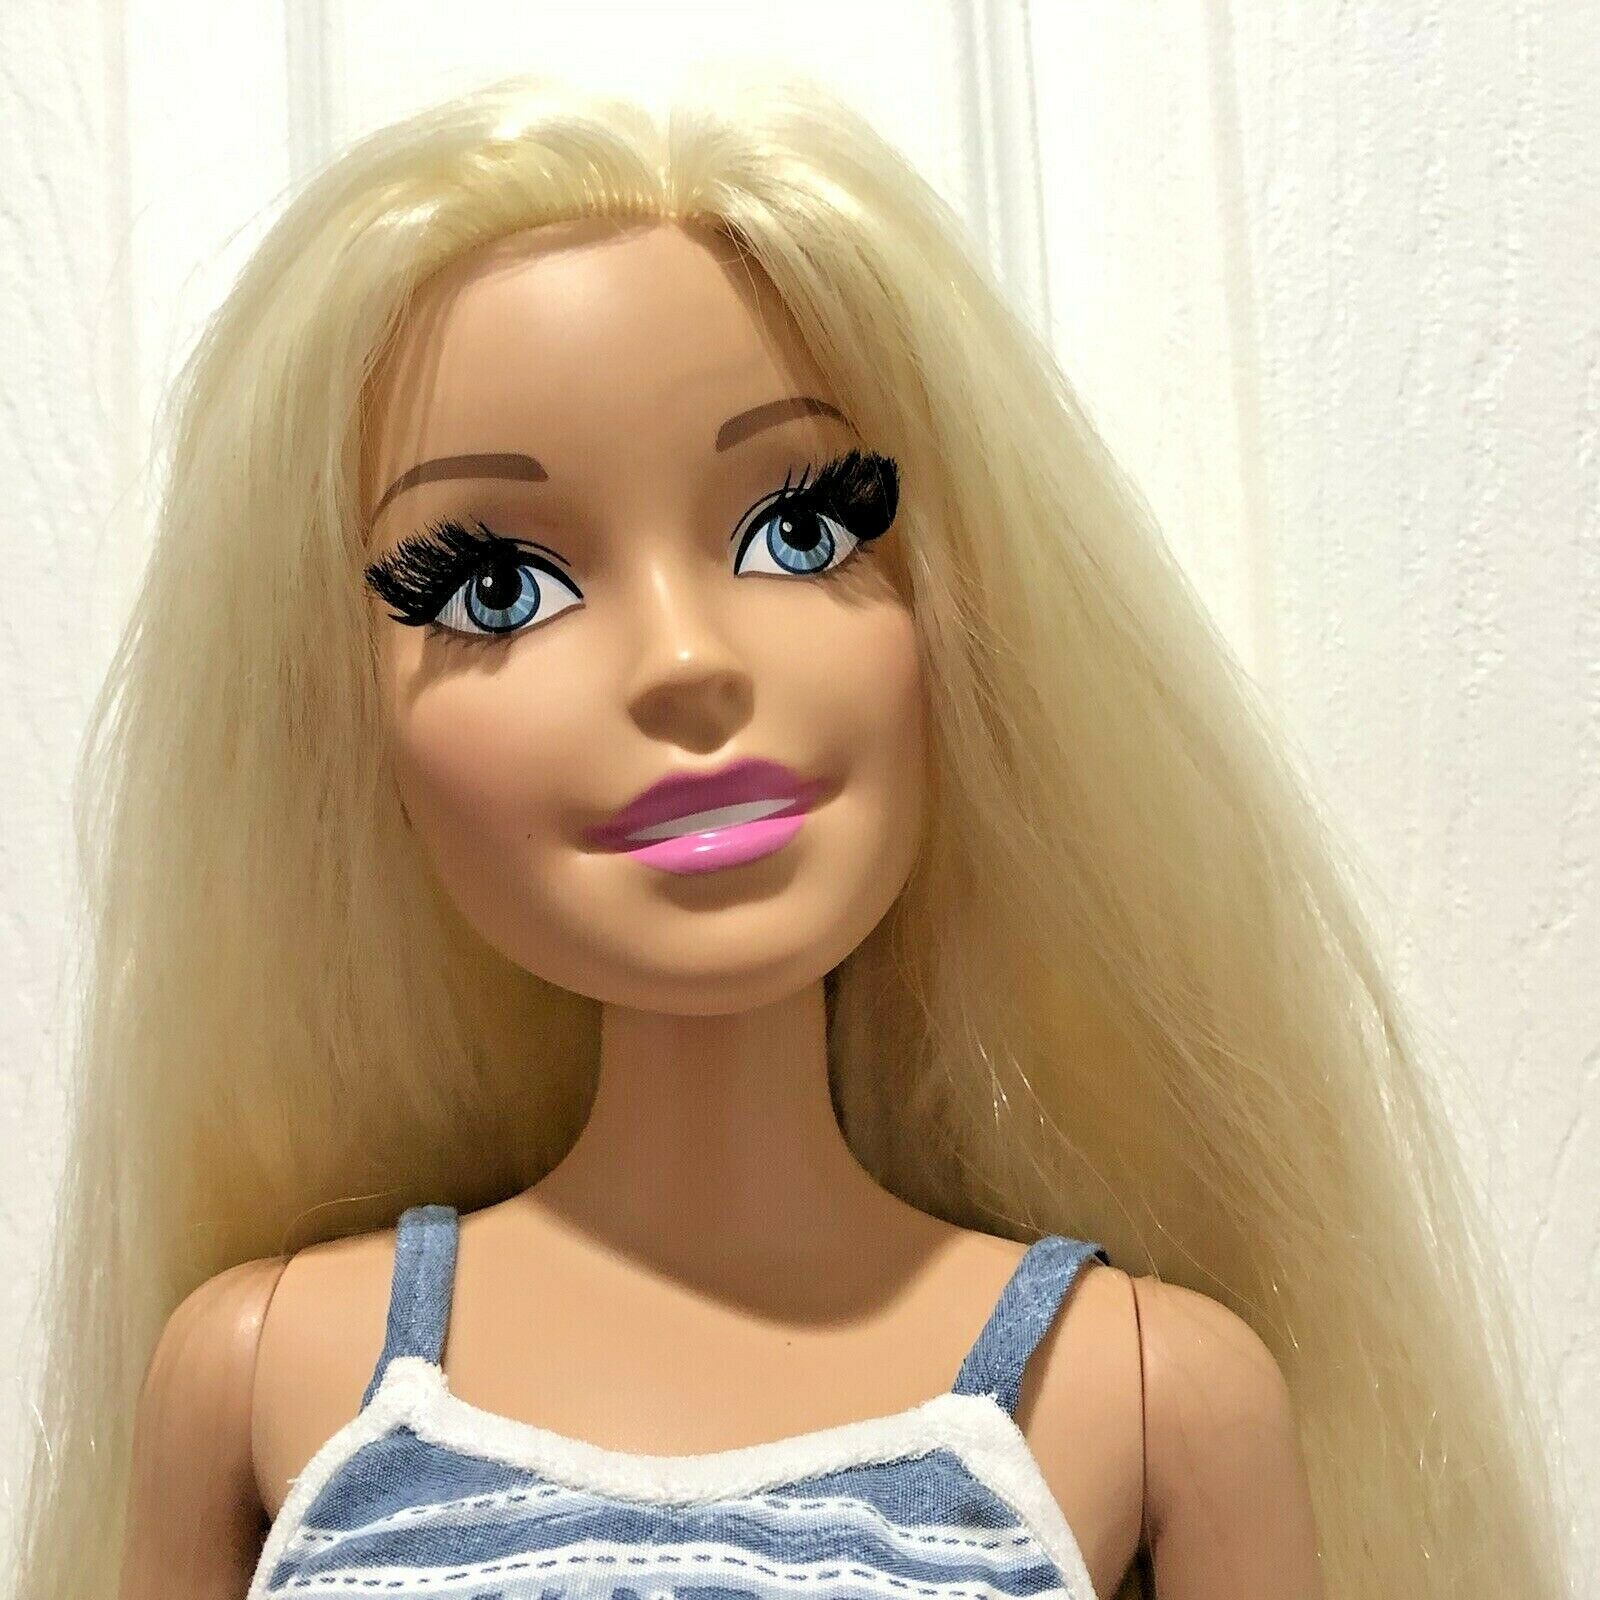 2013 Barbie Just Play Mattel My Life Size Best Friend 28” Inch Tall Blonde Hair